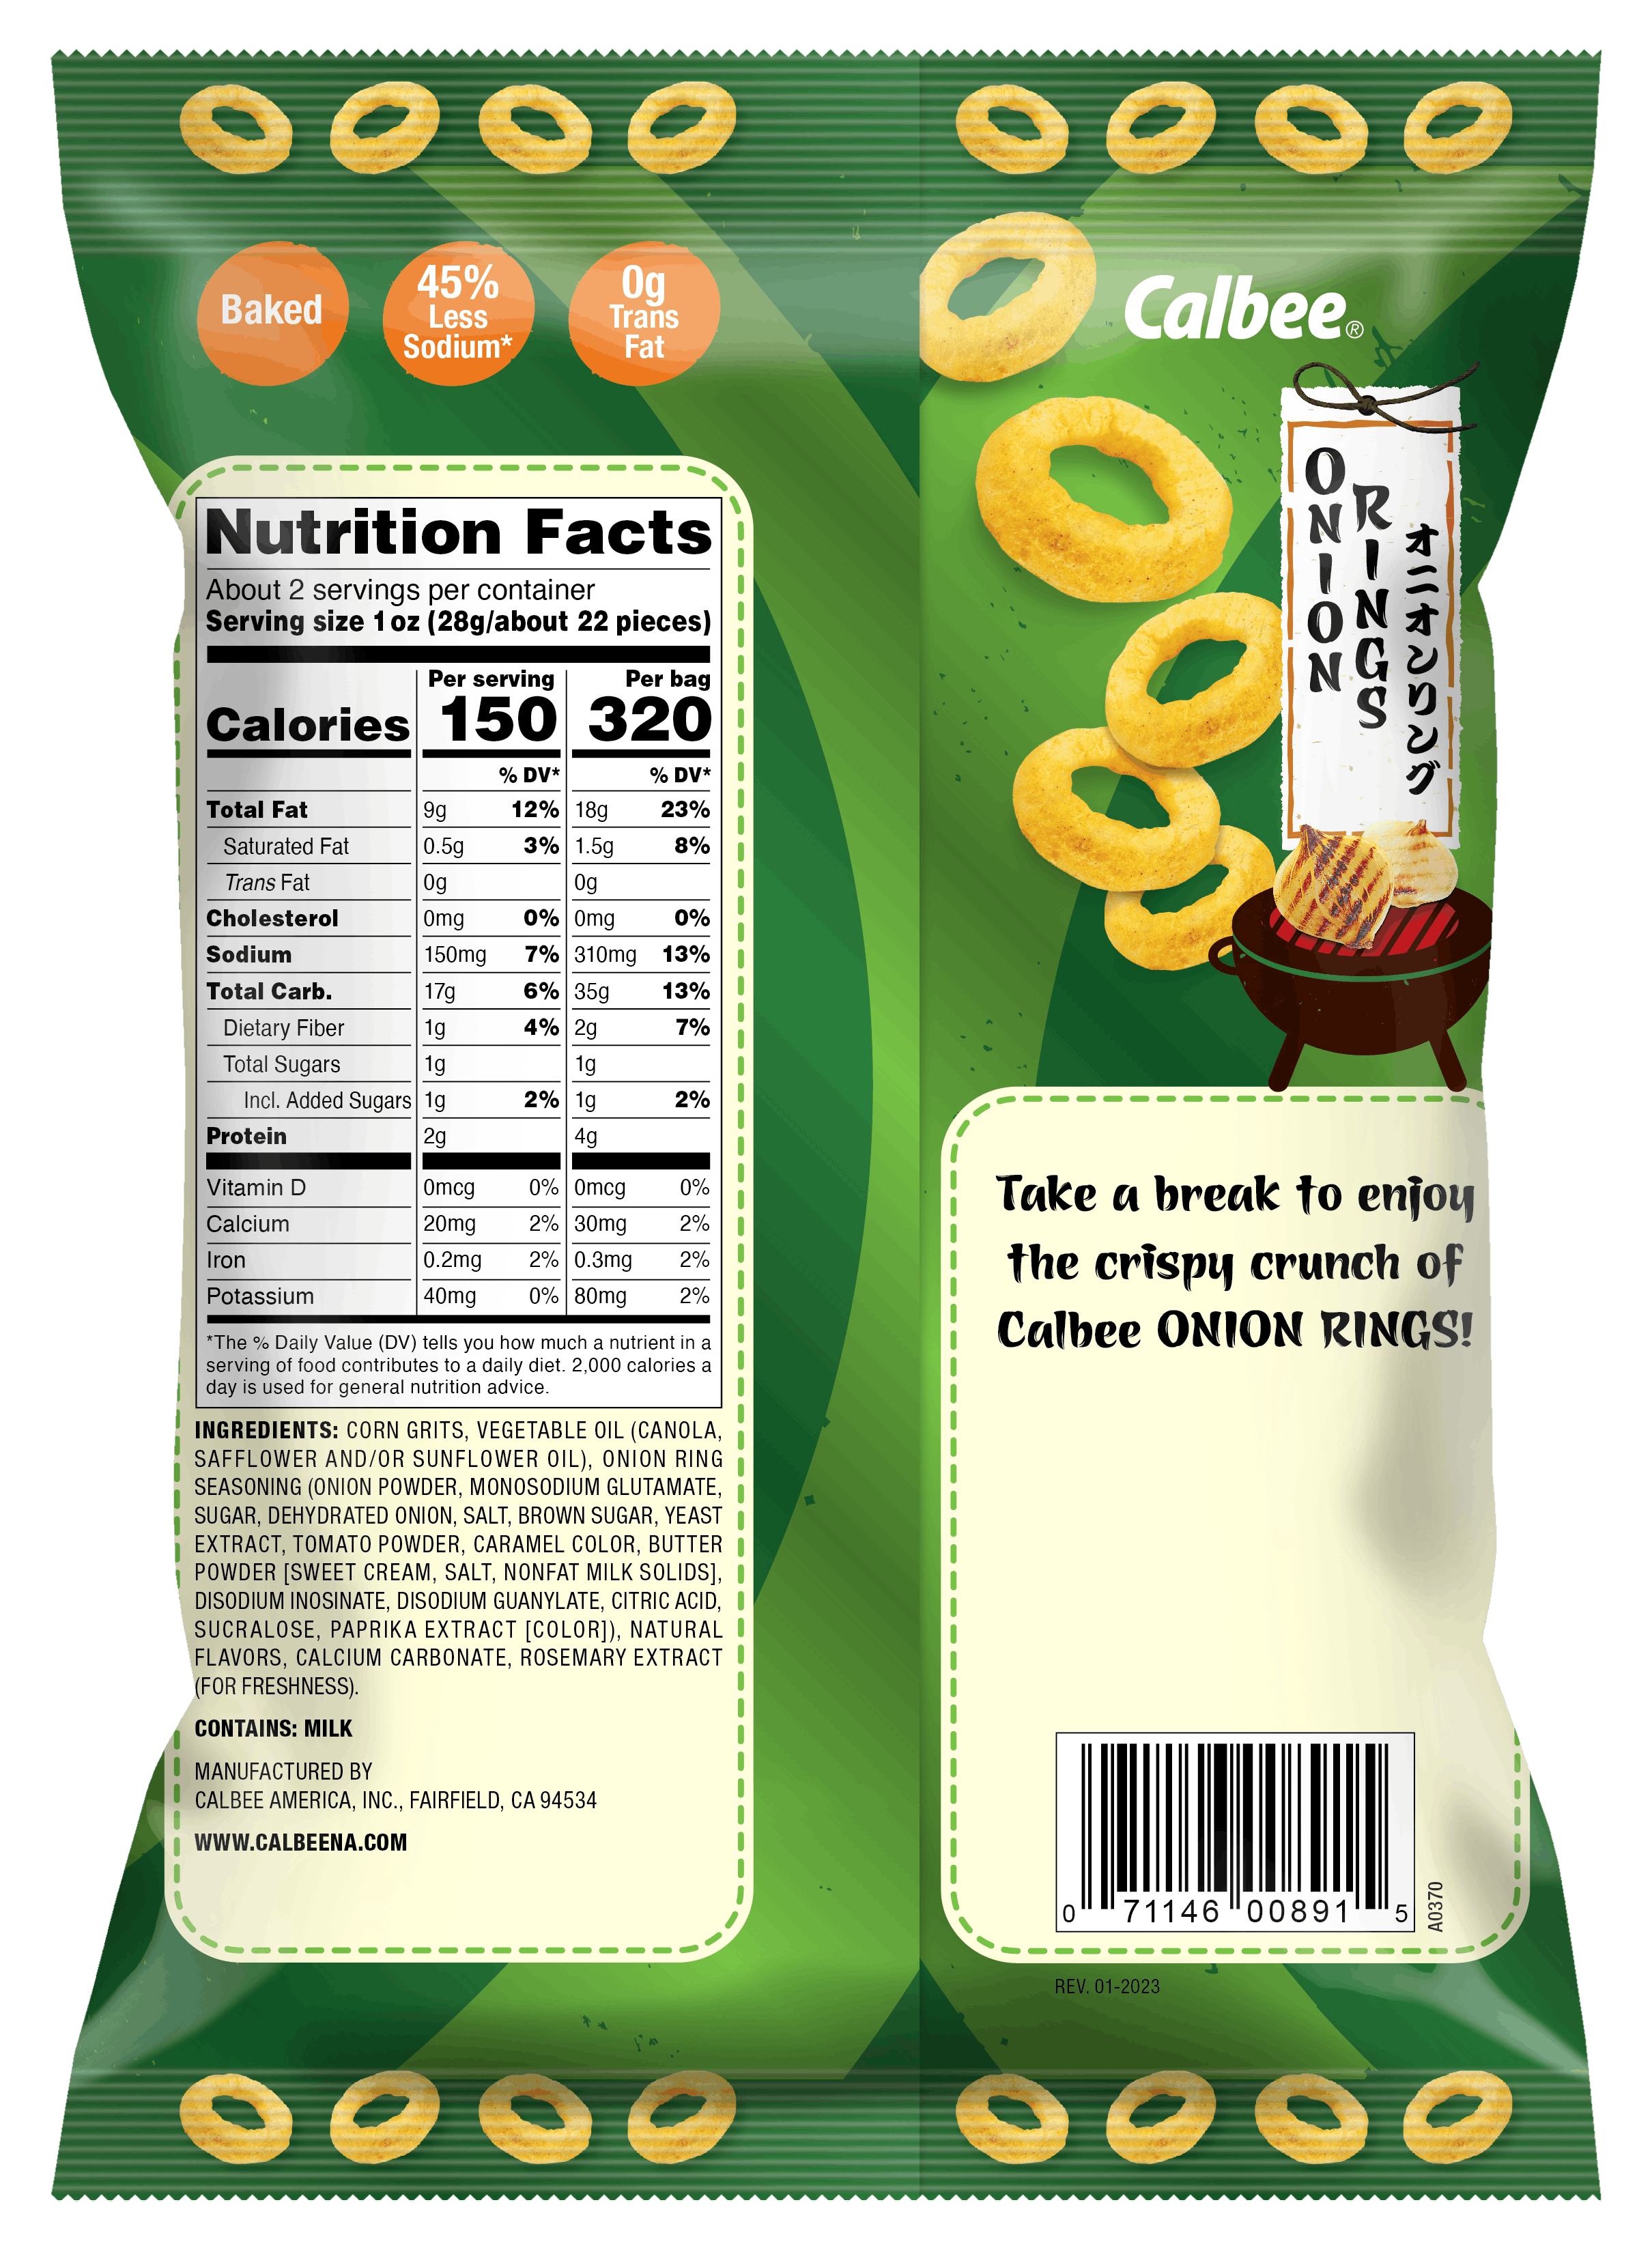 Onion Rings - back of bag